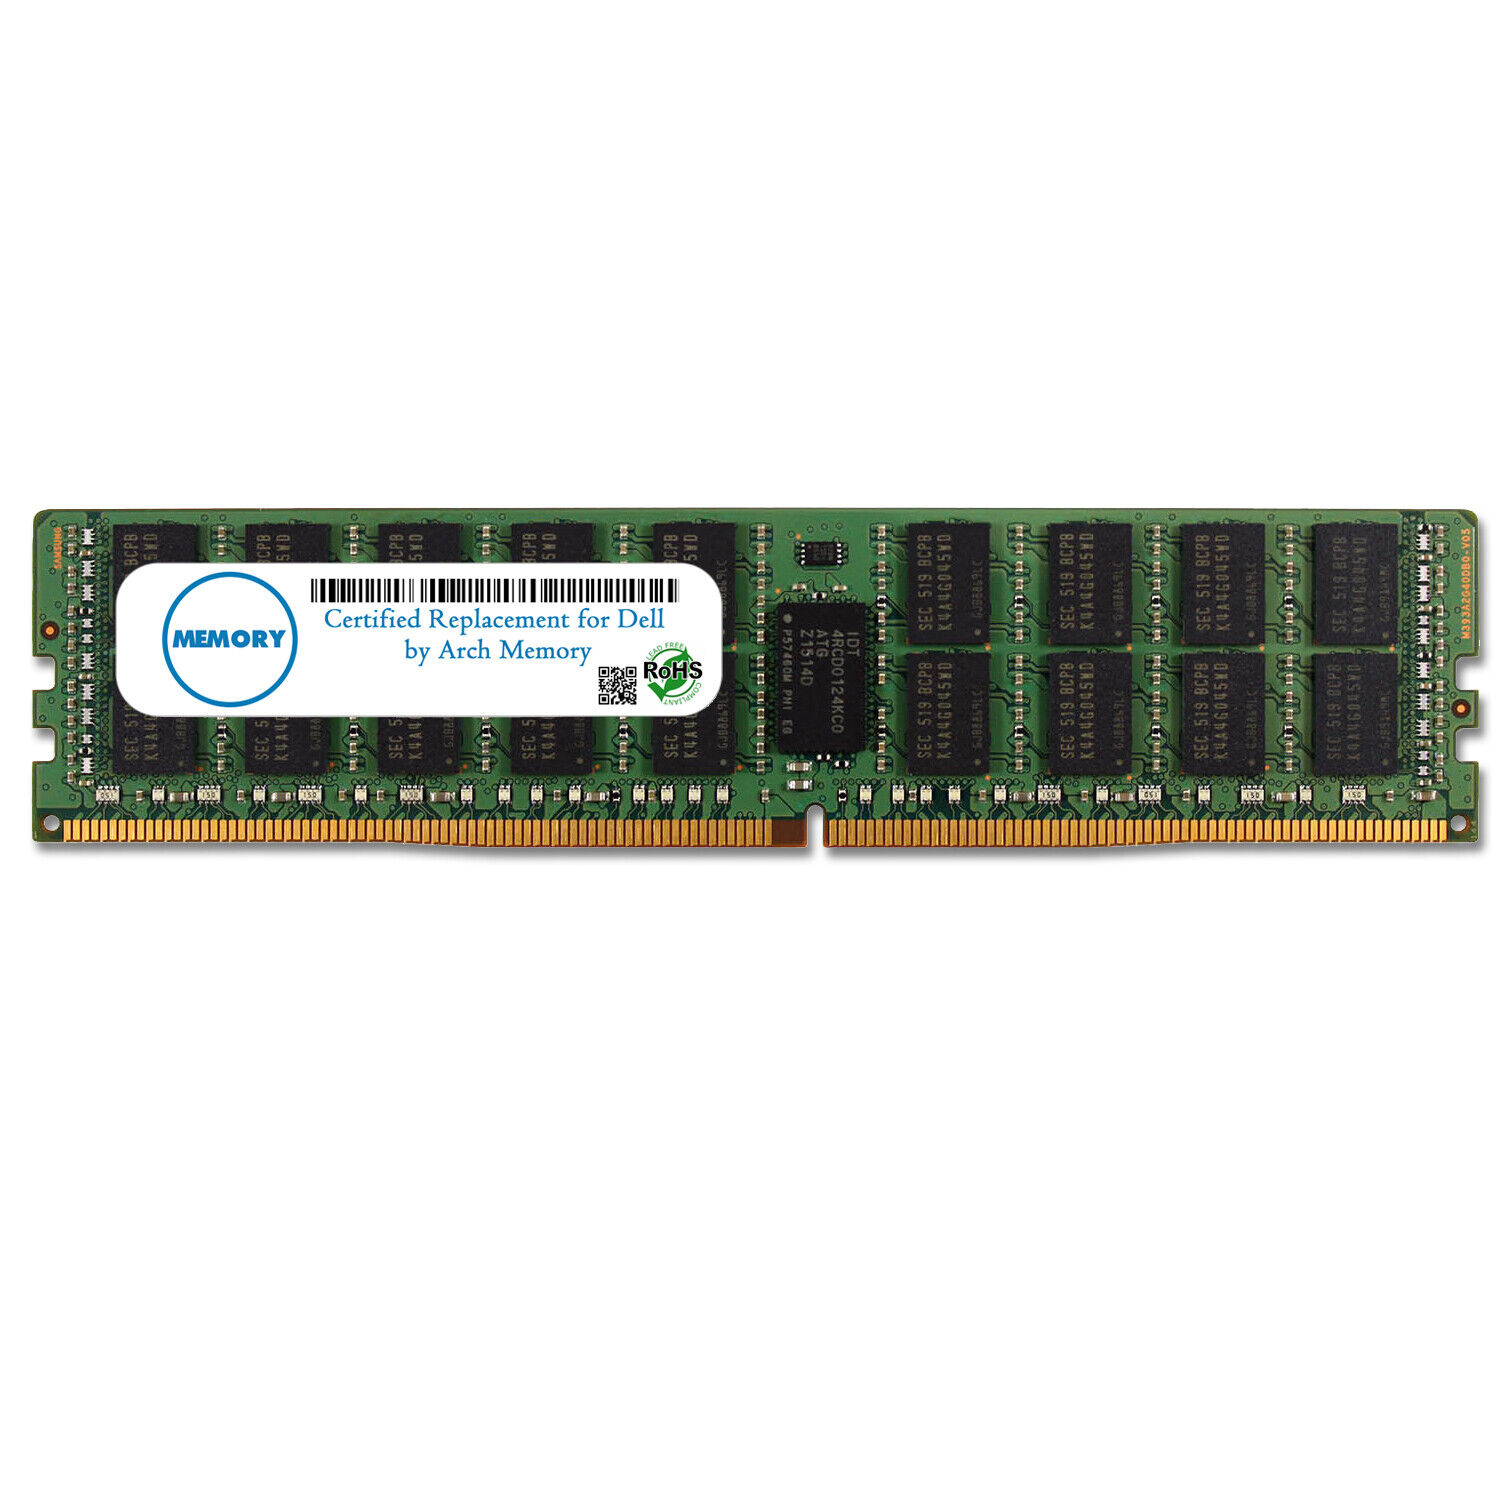 32GB SNPTN78YC/32G A9781929 PC4-21300 DDR4 ECC RDIMM Server RAM Memory for Dell